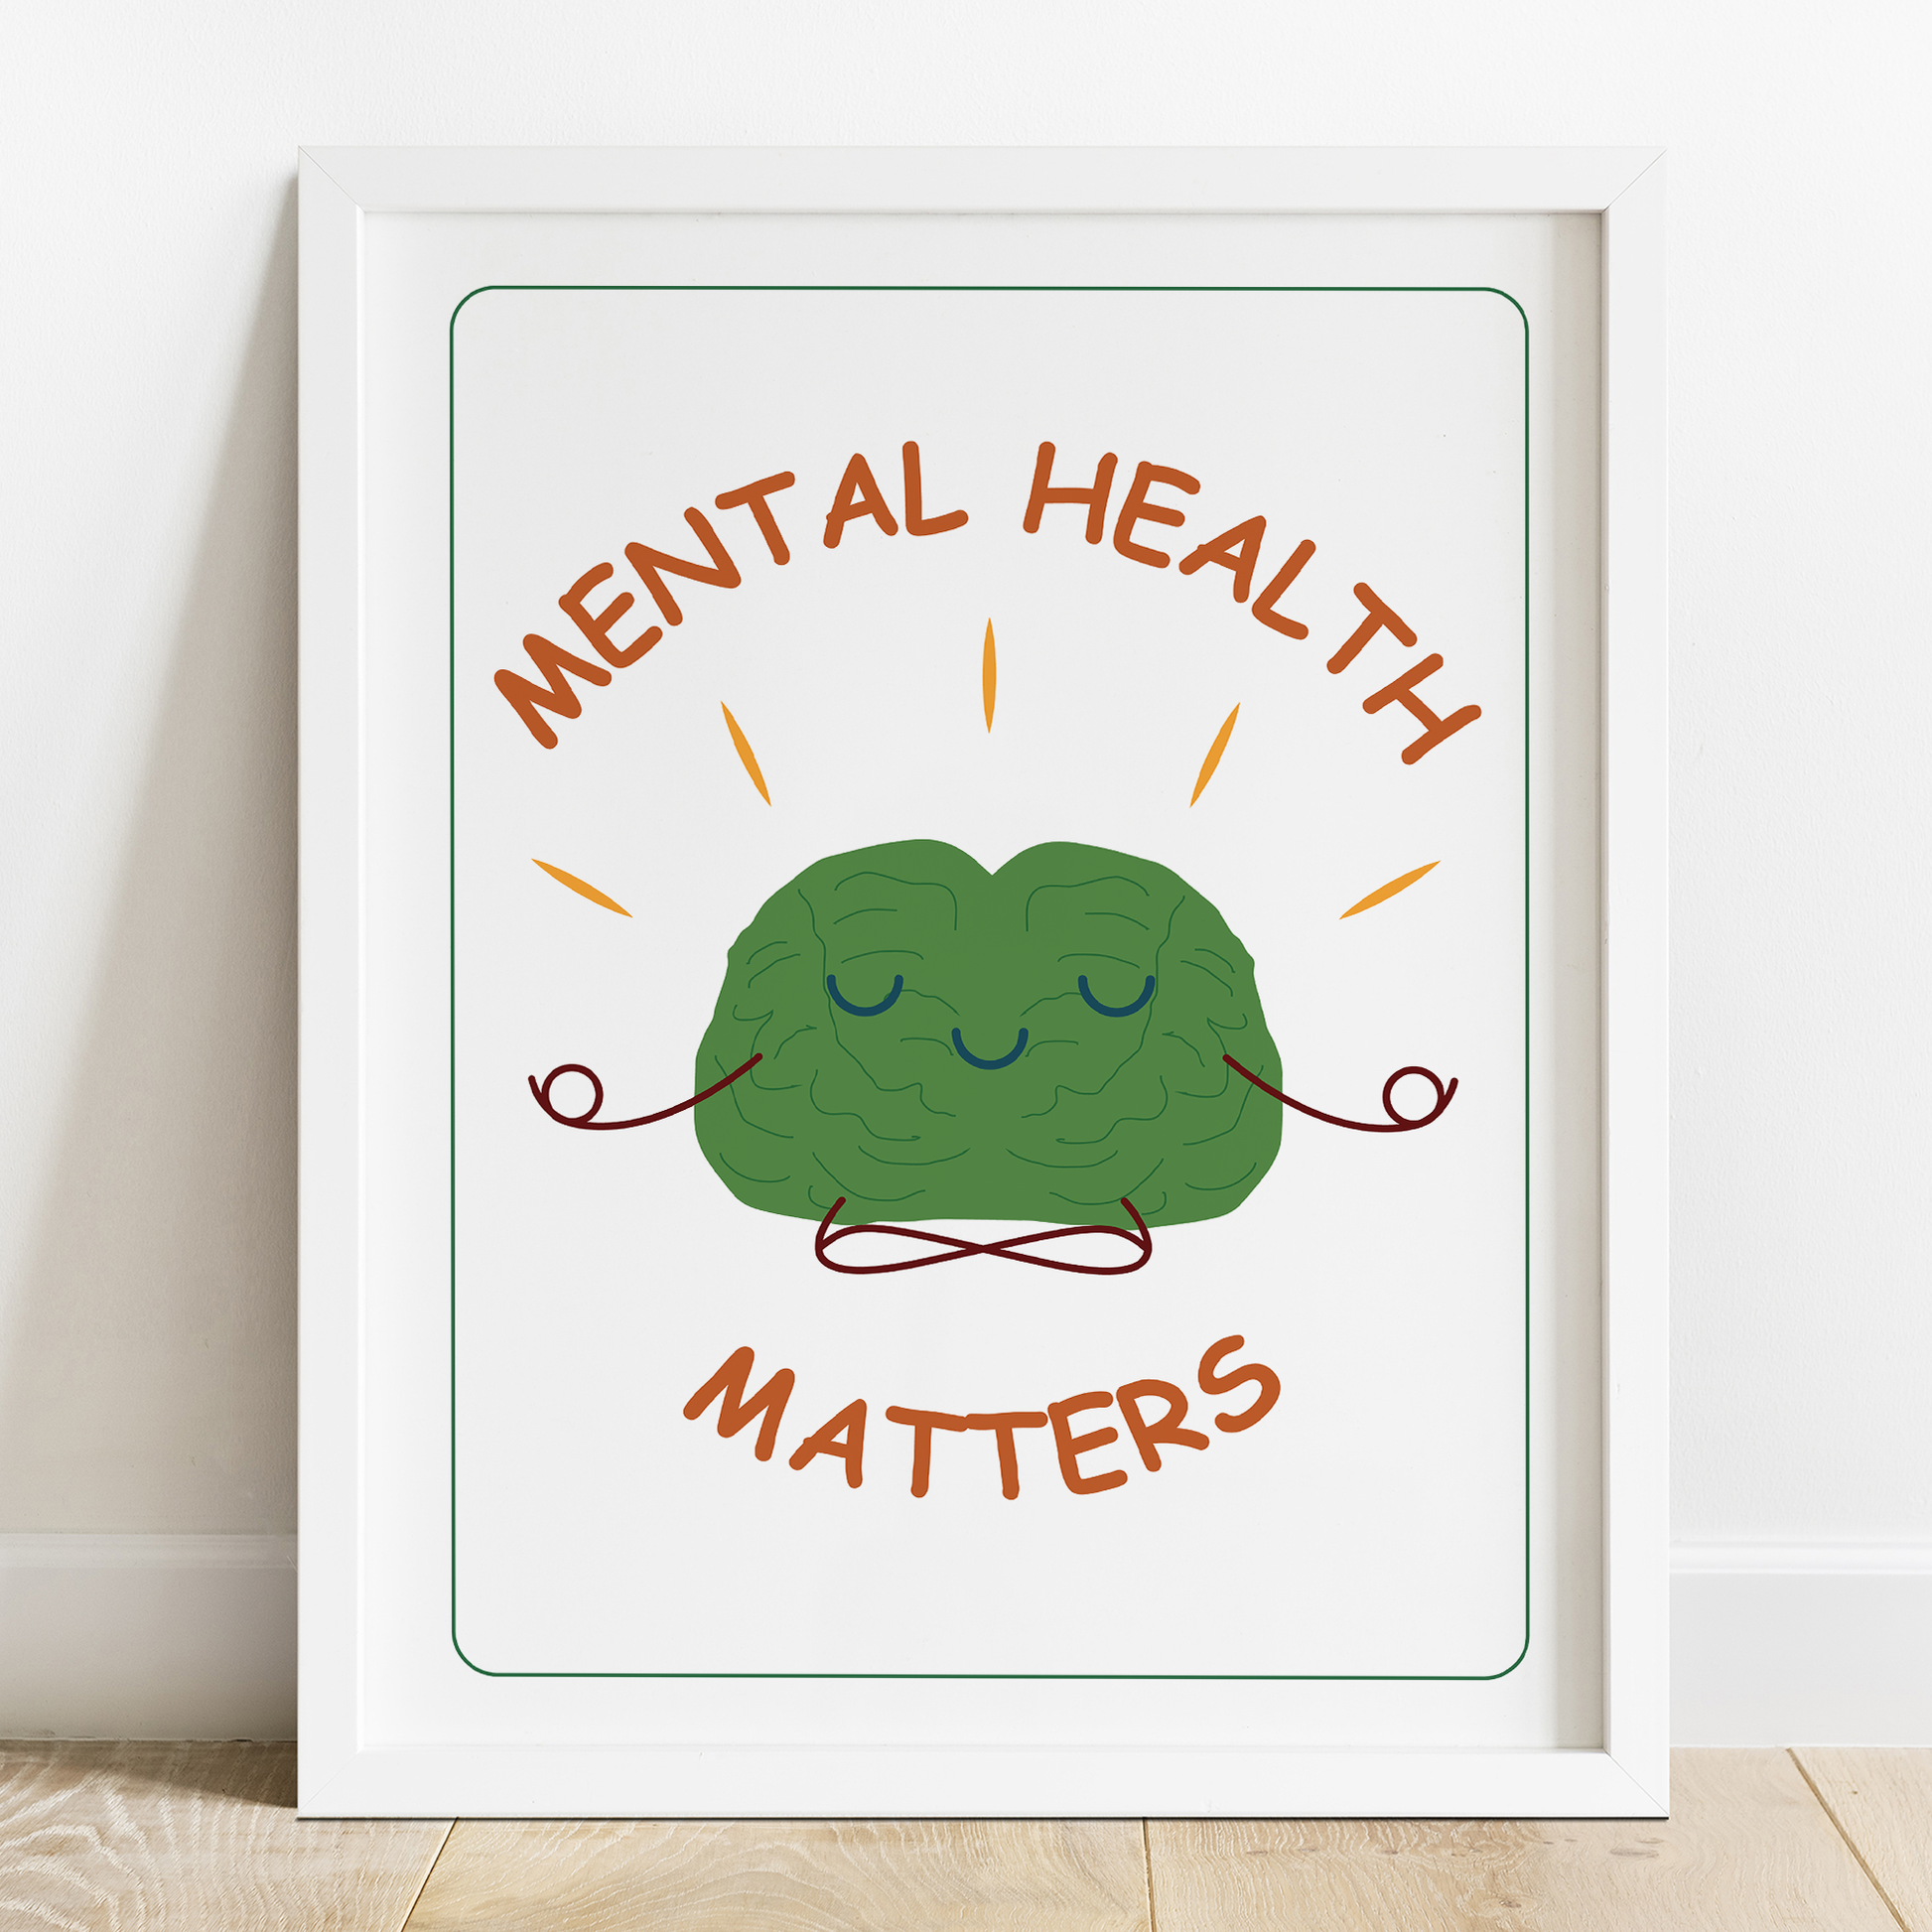 mental health matters poster